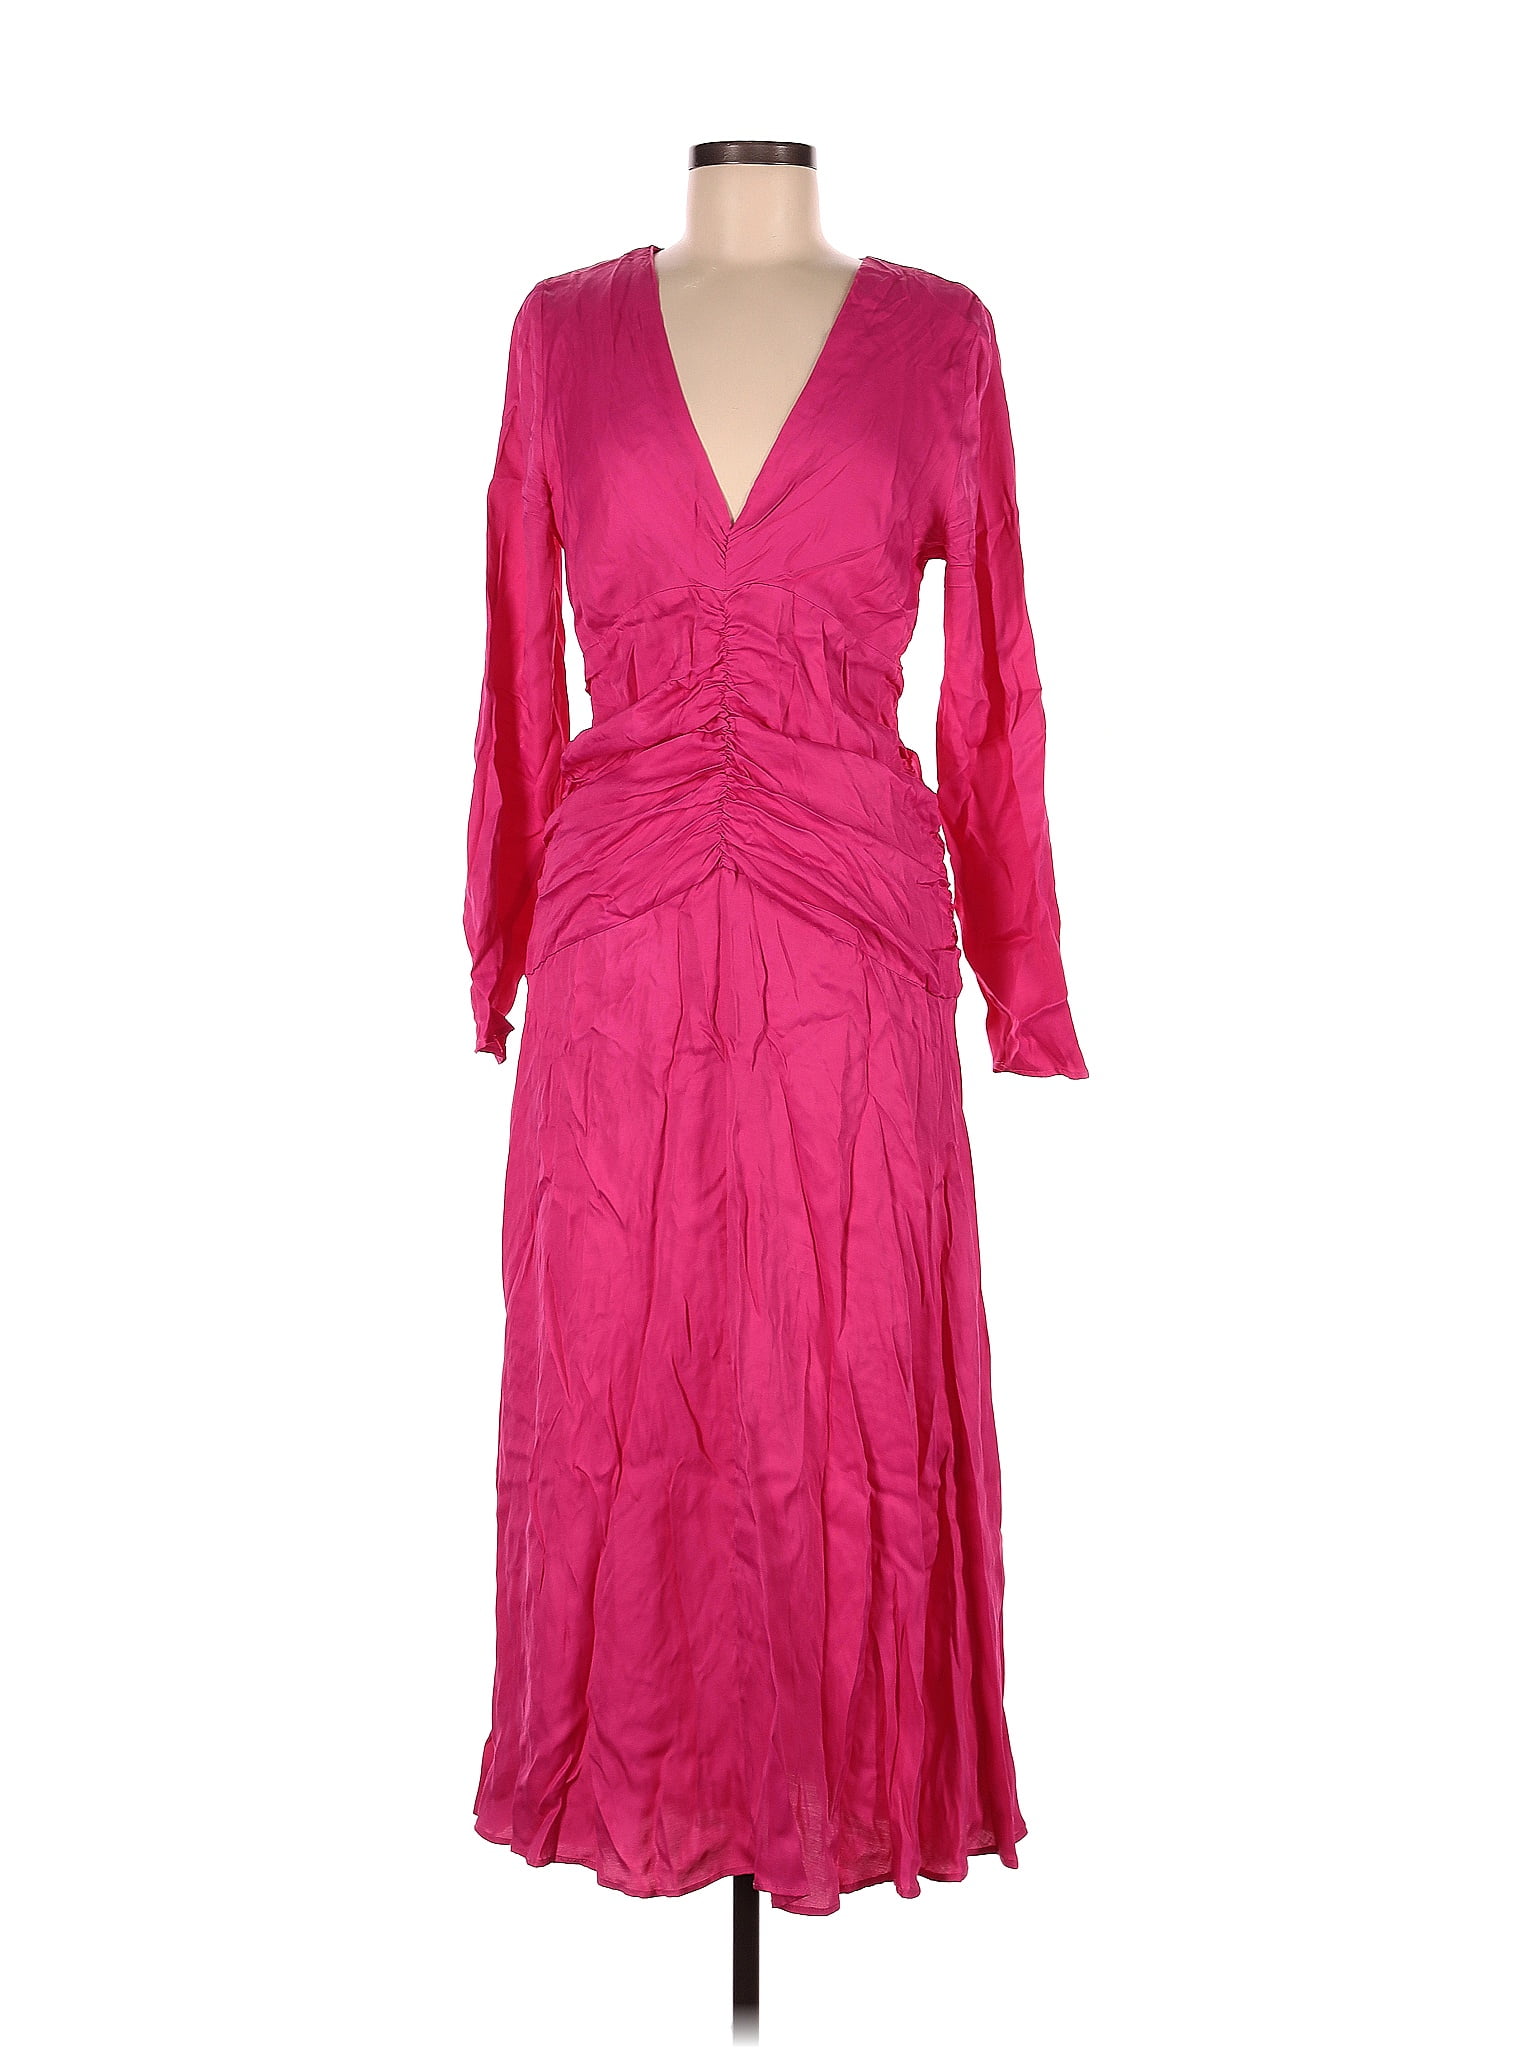 FARM Rio 100% Viscose Solid Pink Casual Dress Size M - 69% off | ThredUp